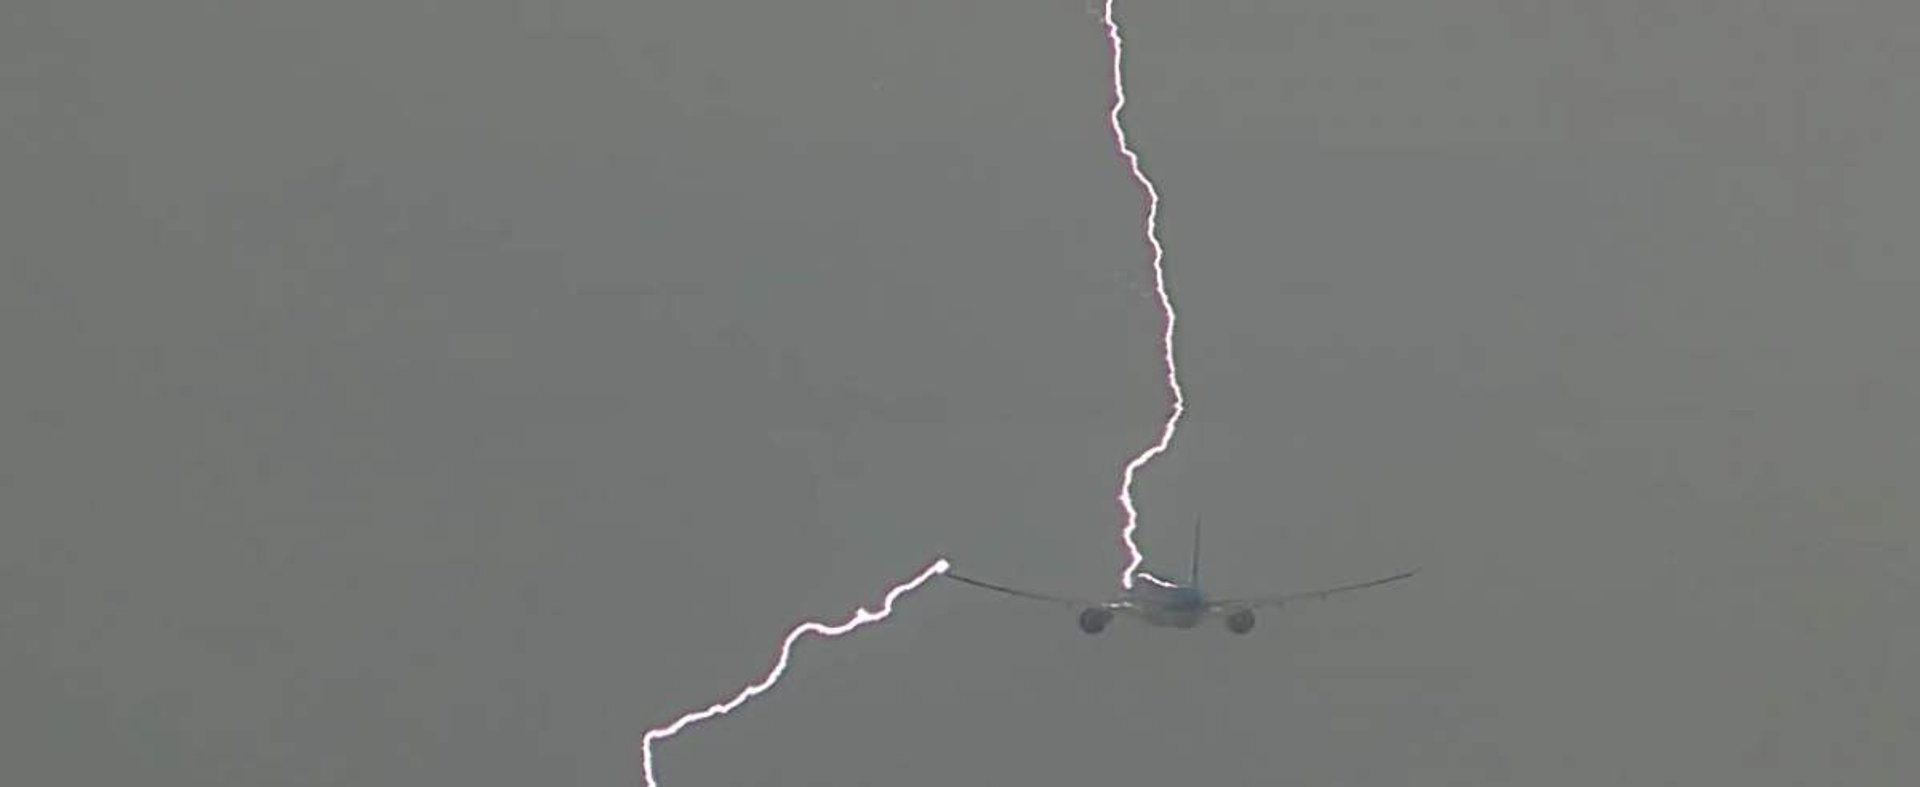 samolot uderzenie piorunem